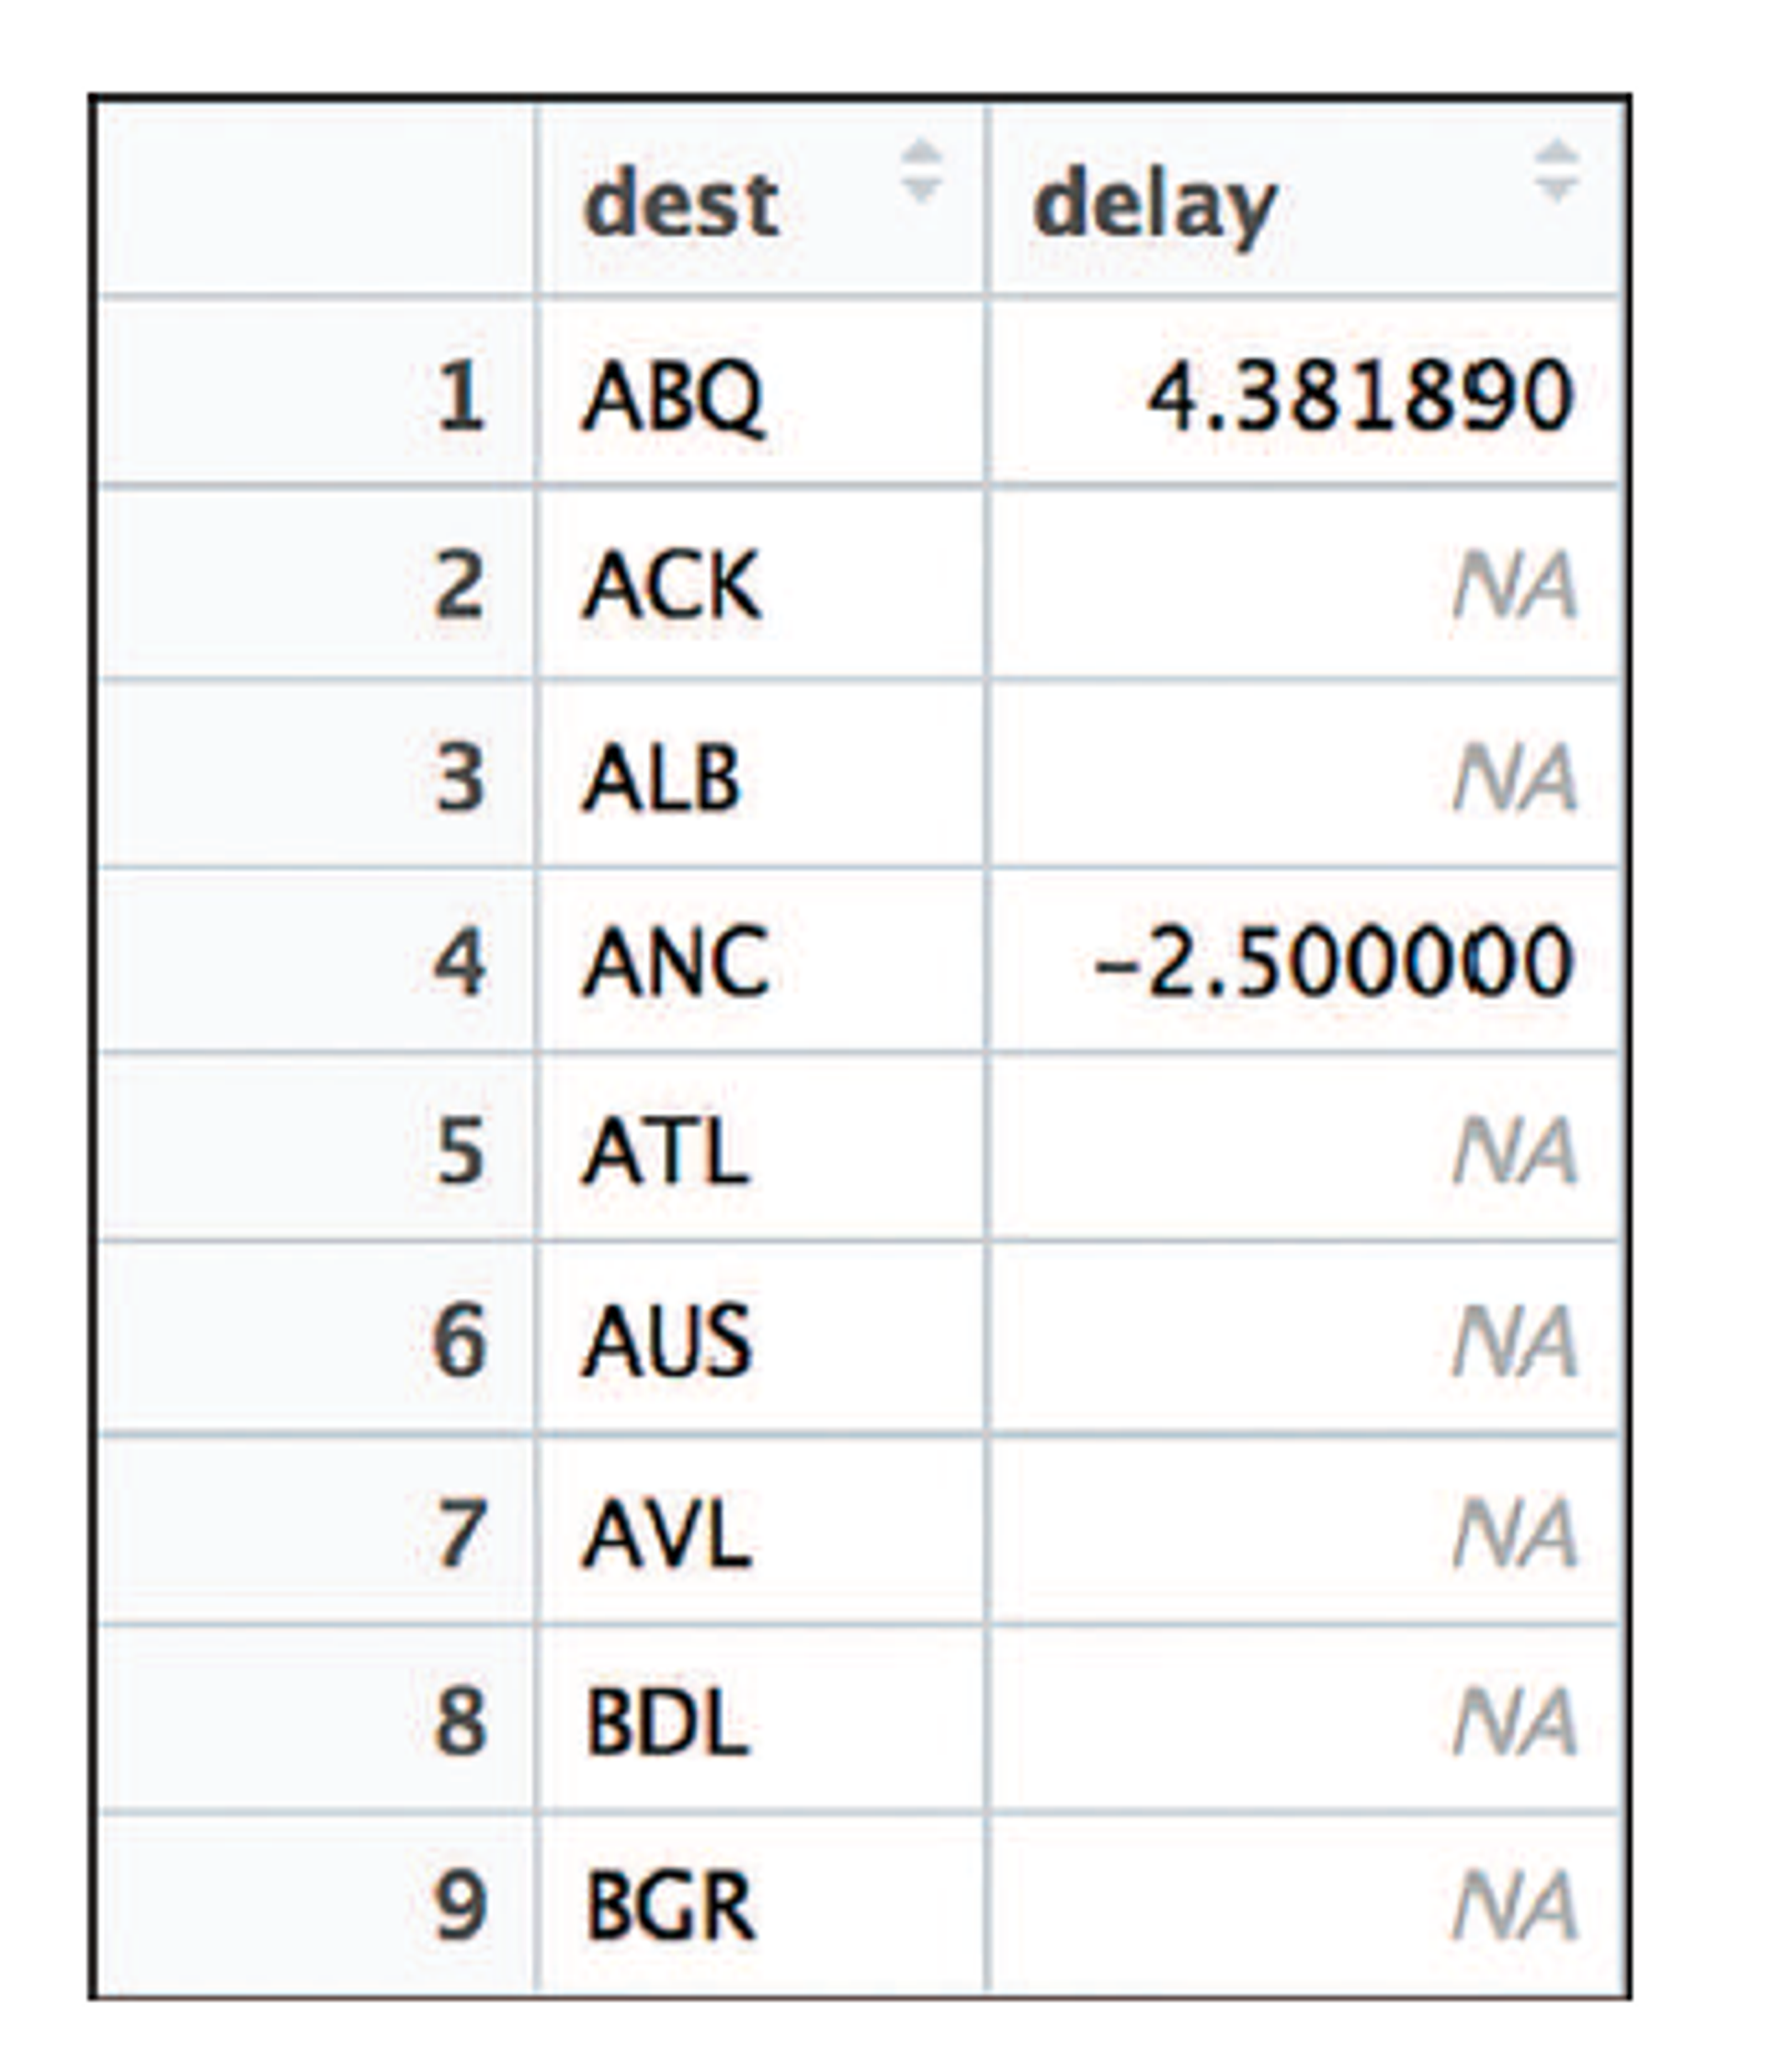 Average delay by destination in flight data